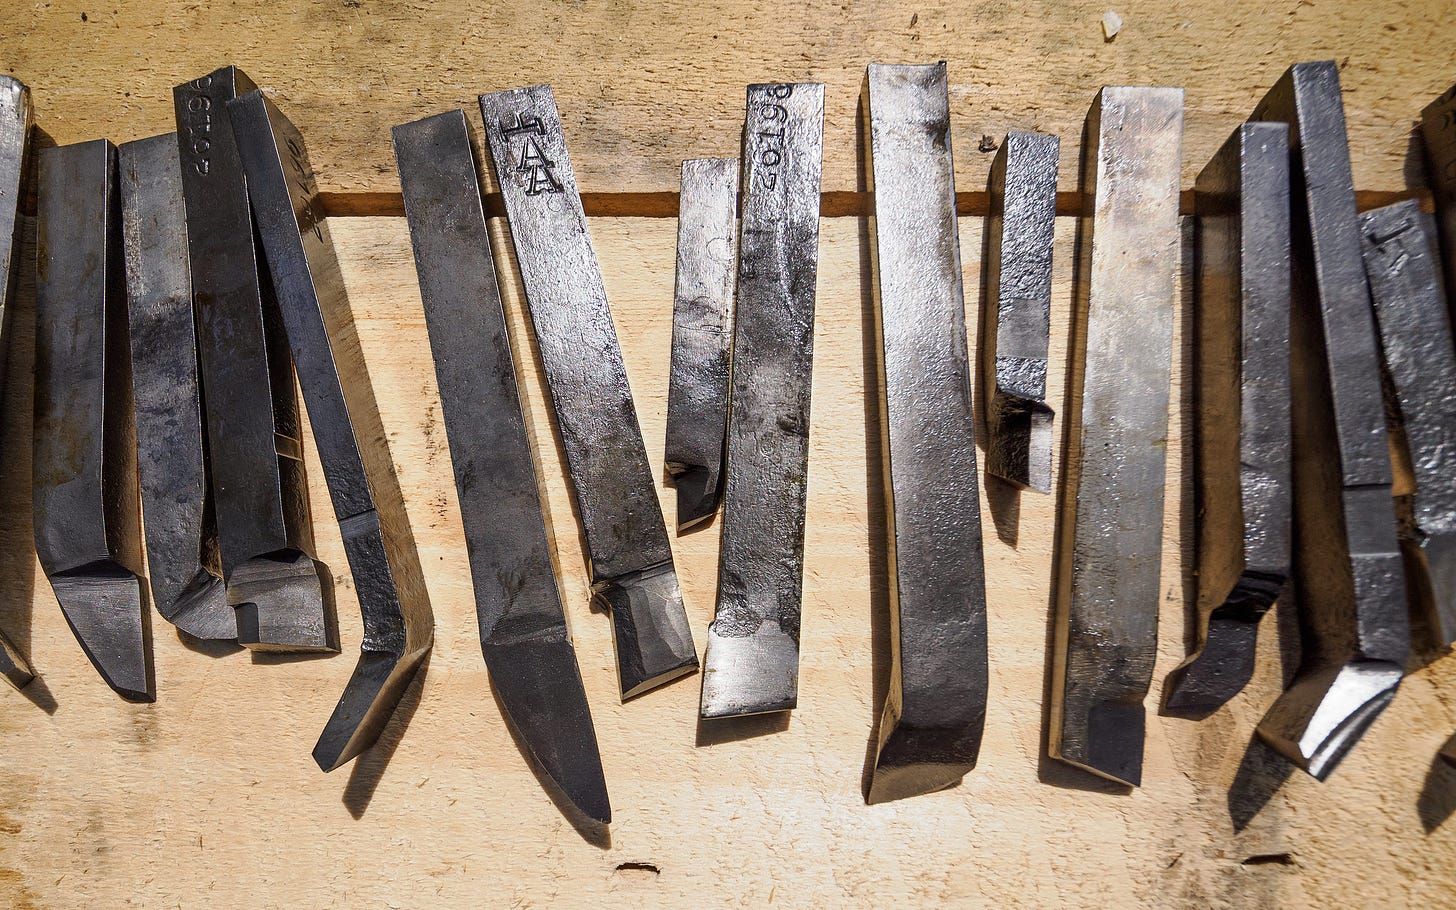 Steel cutting tools